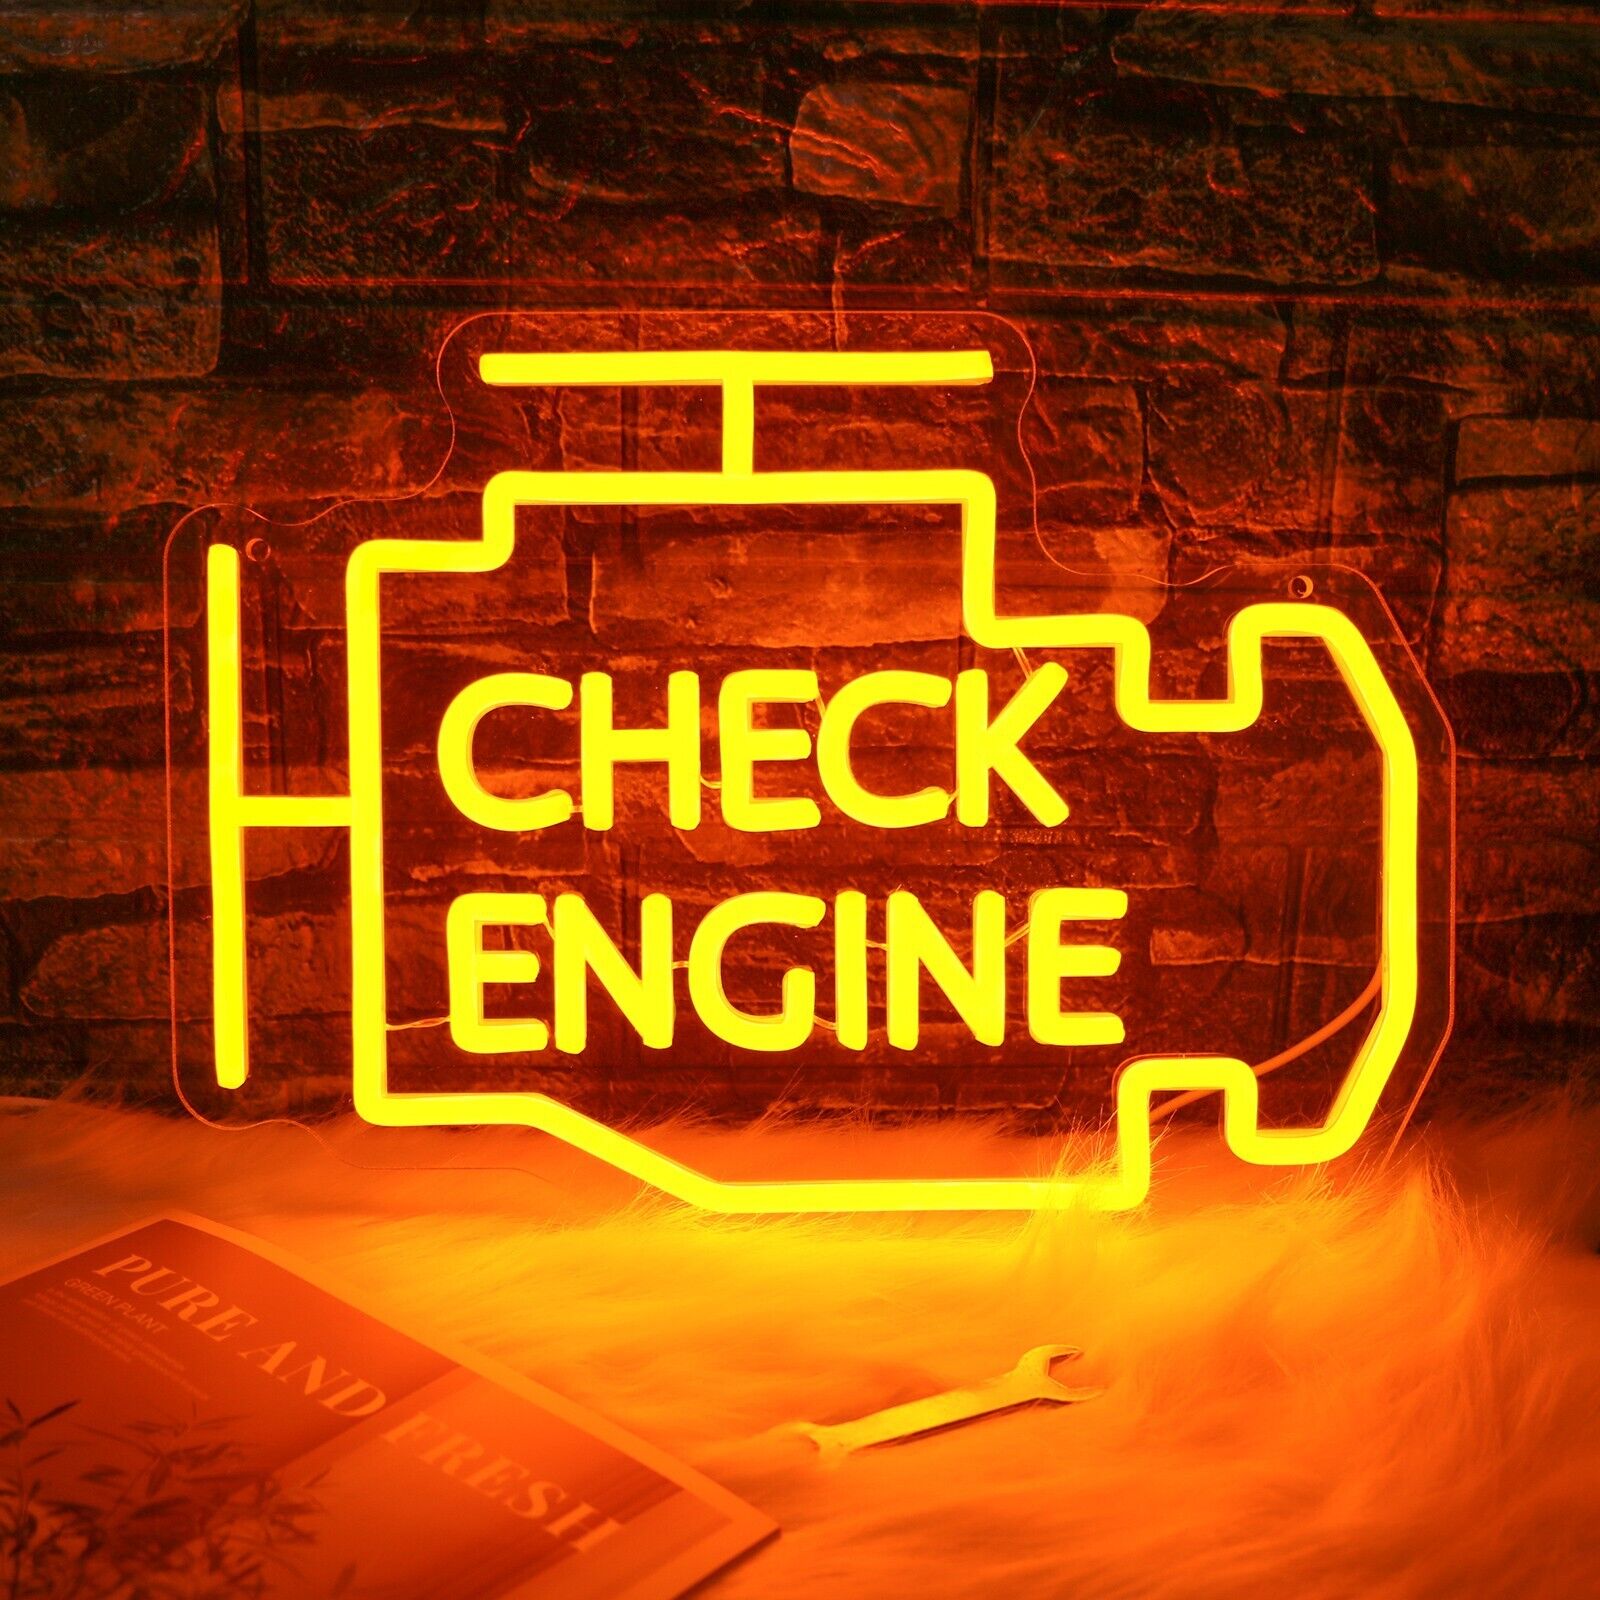 Check Engine Neon LED Light Sign, LED Neon Sign for Garage Decor